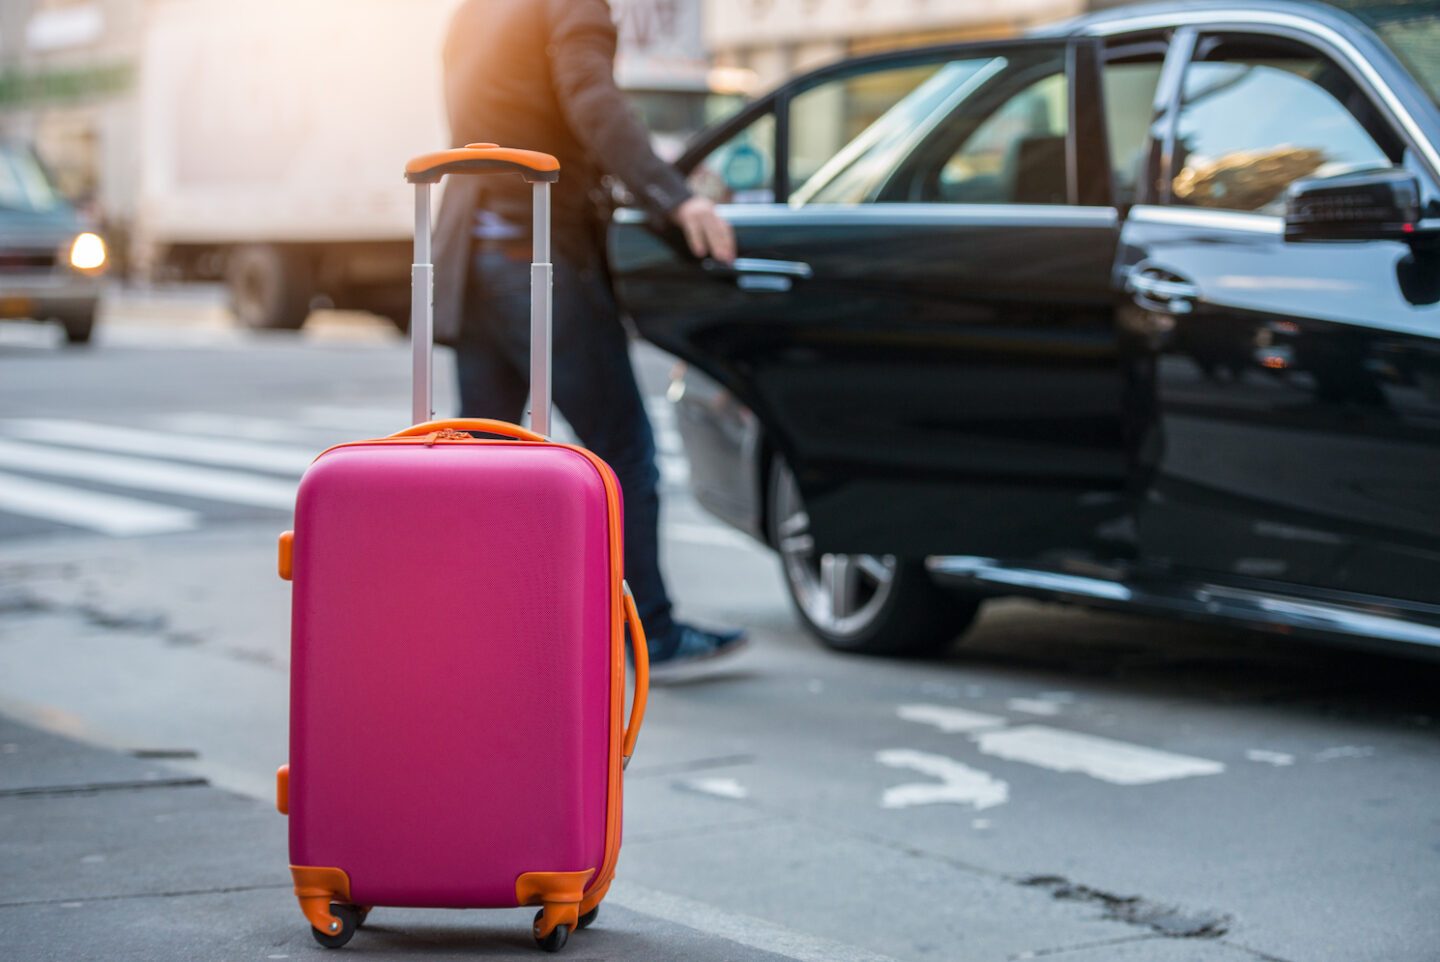 Top 6 Benefits of Hiring an Airport Car Service